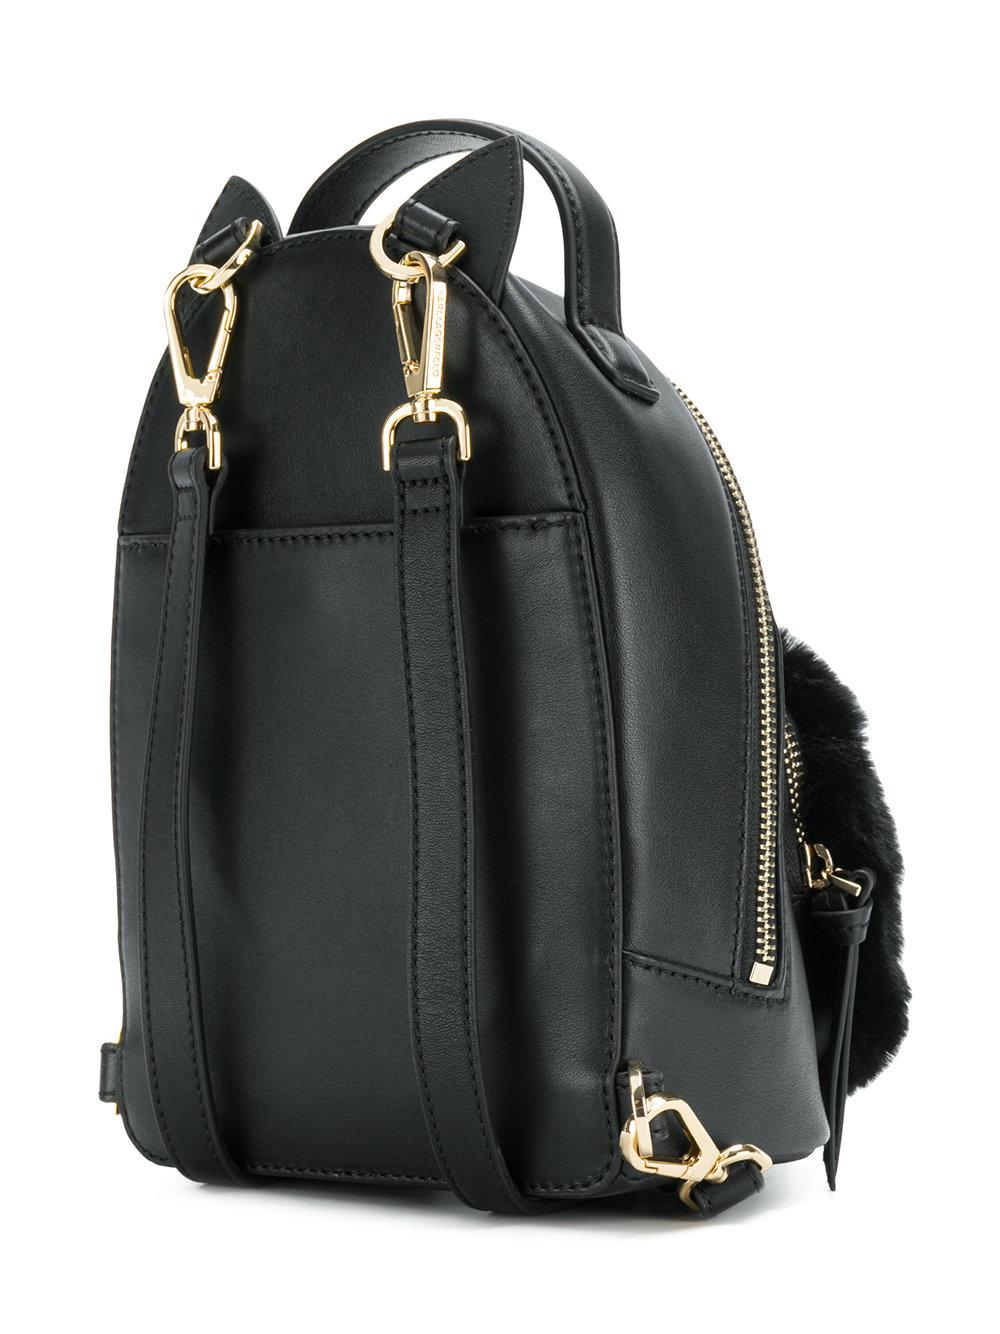 Karl Lagerfeld Leather K/love Mini Backpack in Black - Lyst